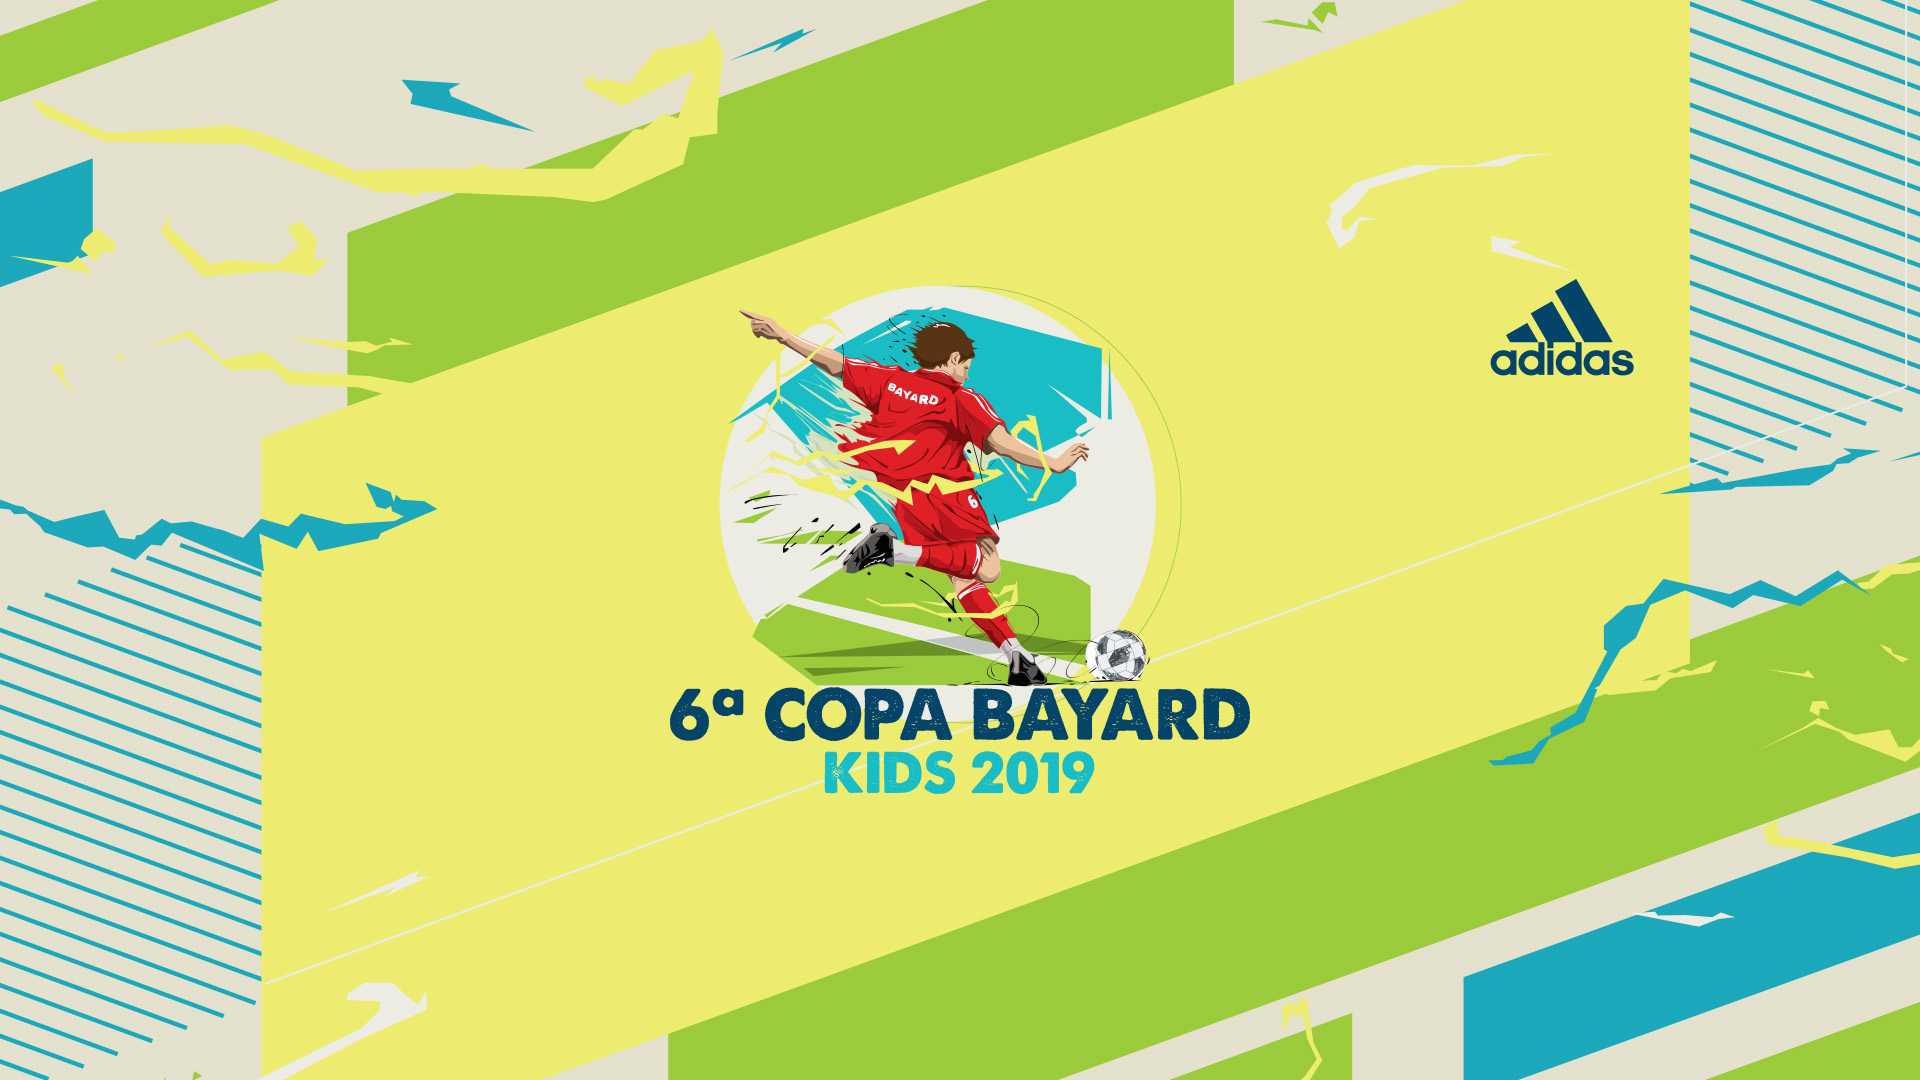 Imagem do key visual da 6ª Copa Bayard Kids - Adidas.